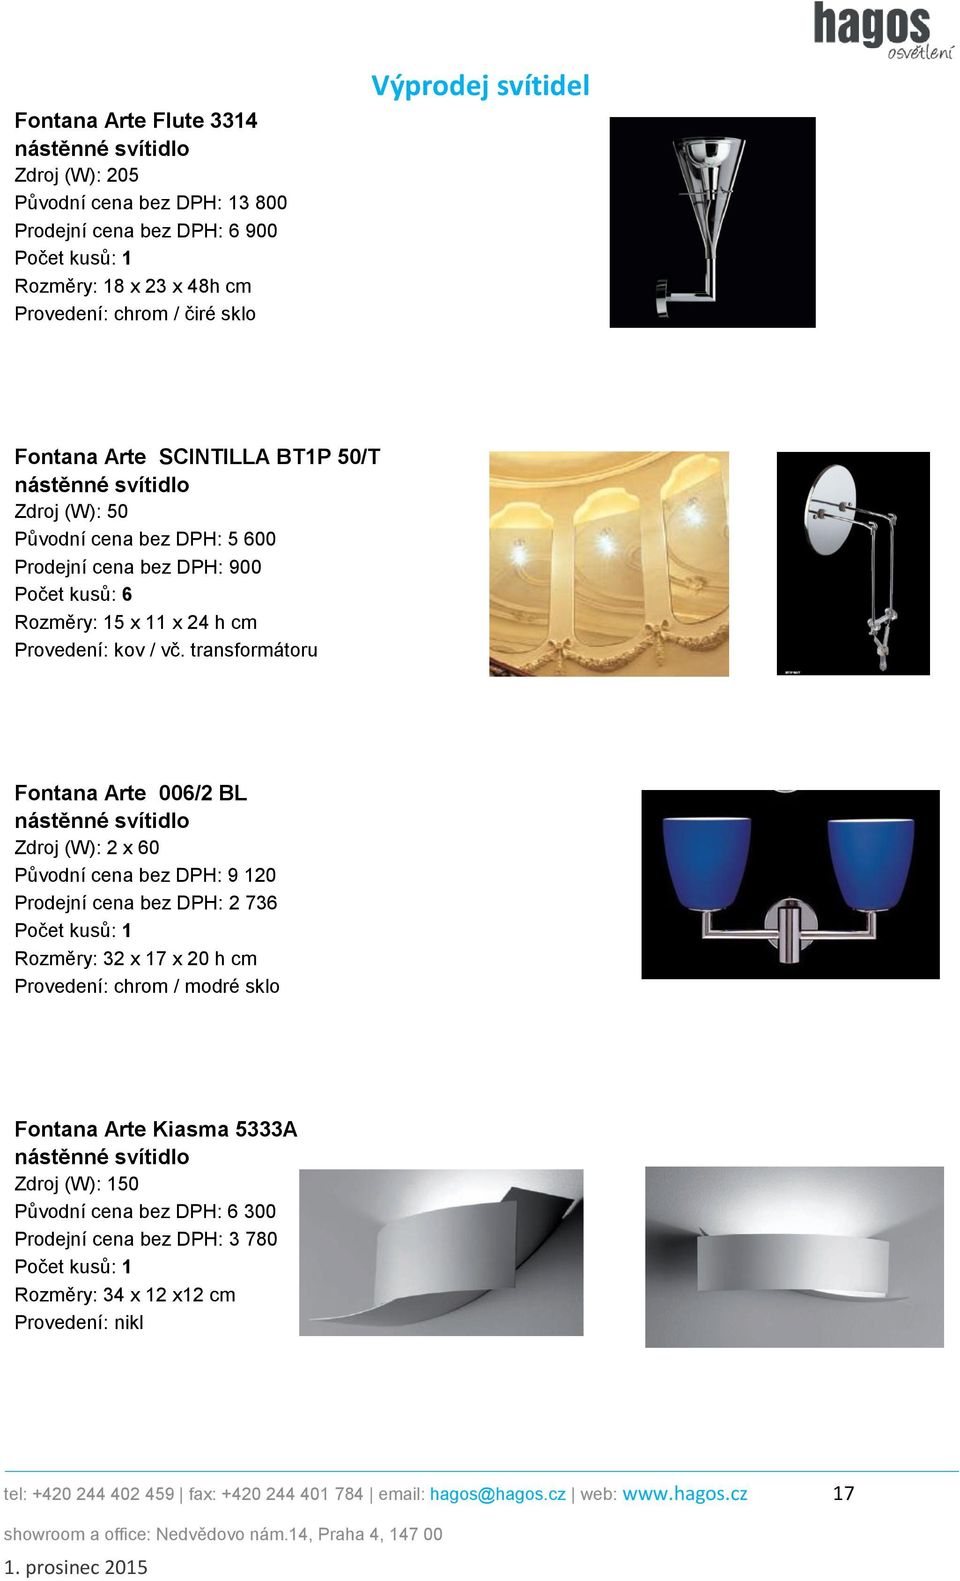 transformátoru Fontana Arte 006/2 BL Zdroj (W): 2 x 60 Původní cena bez DPH: 9 120 Prodejní cena bez DPH: 2 736 Rozměry: 32 x 17 x 20 h cm Provedení: chrom / modré sklo Fontana